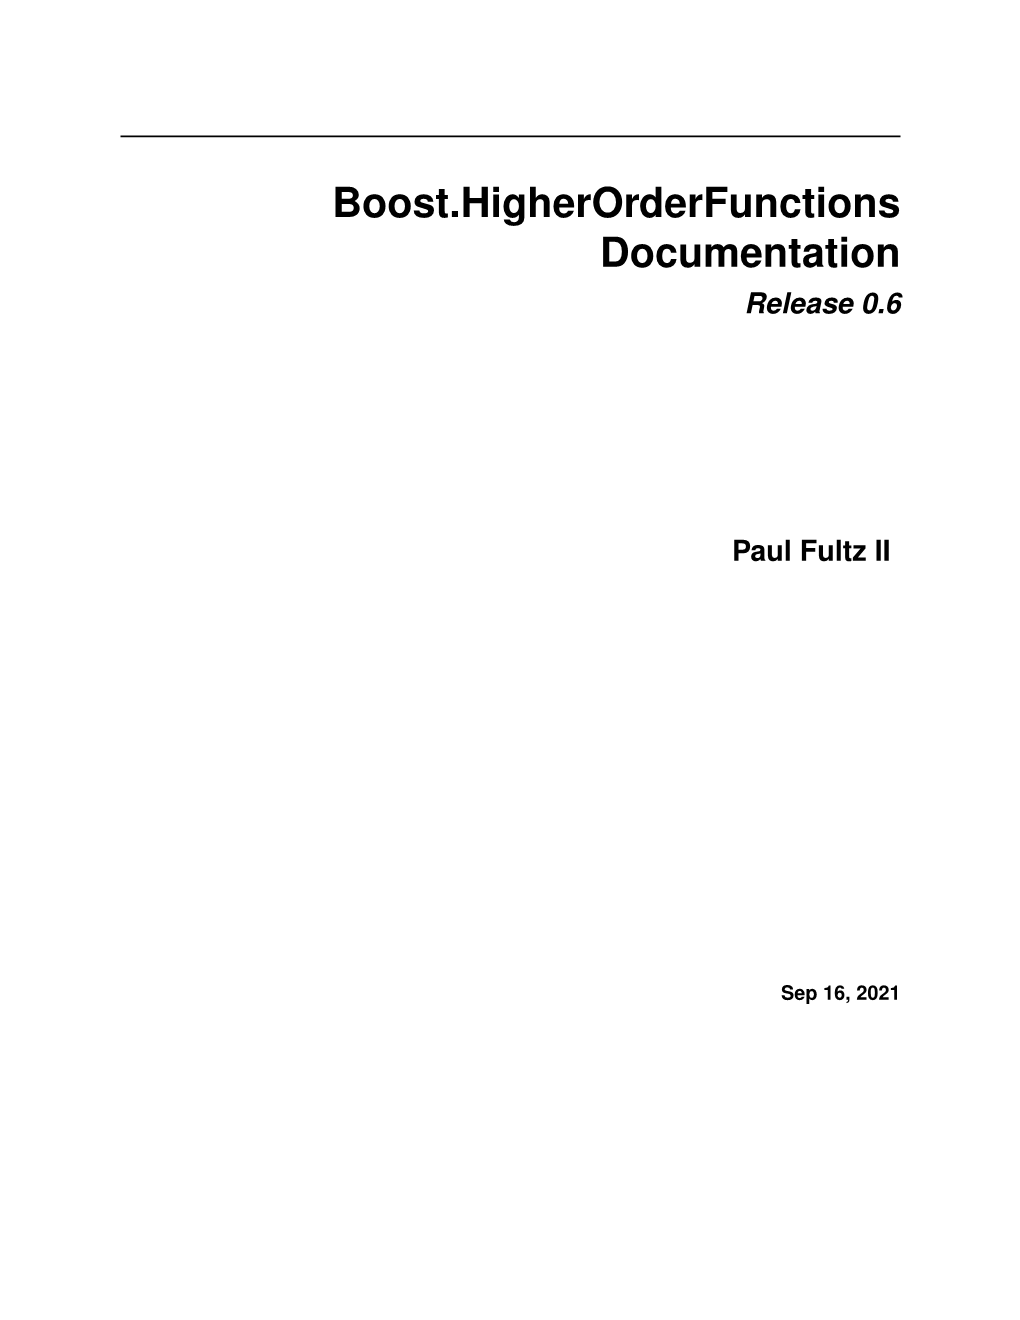 Boost.Higherorderfunctions Documentation Release 0.6